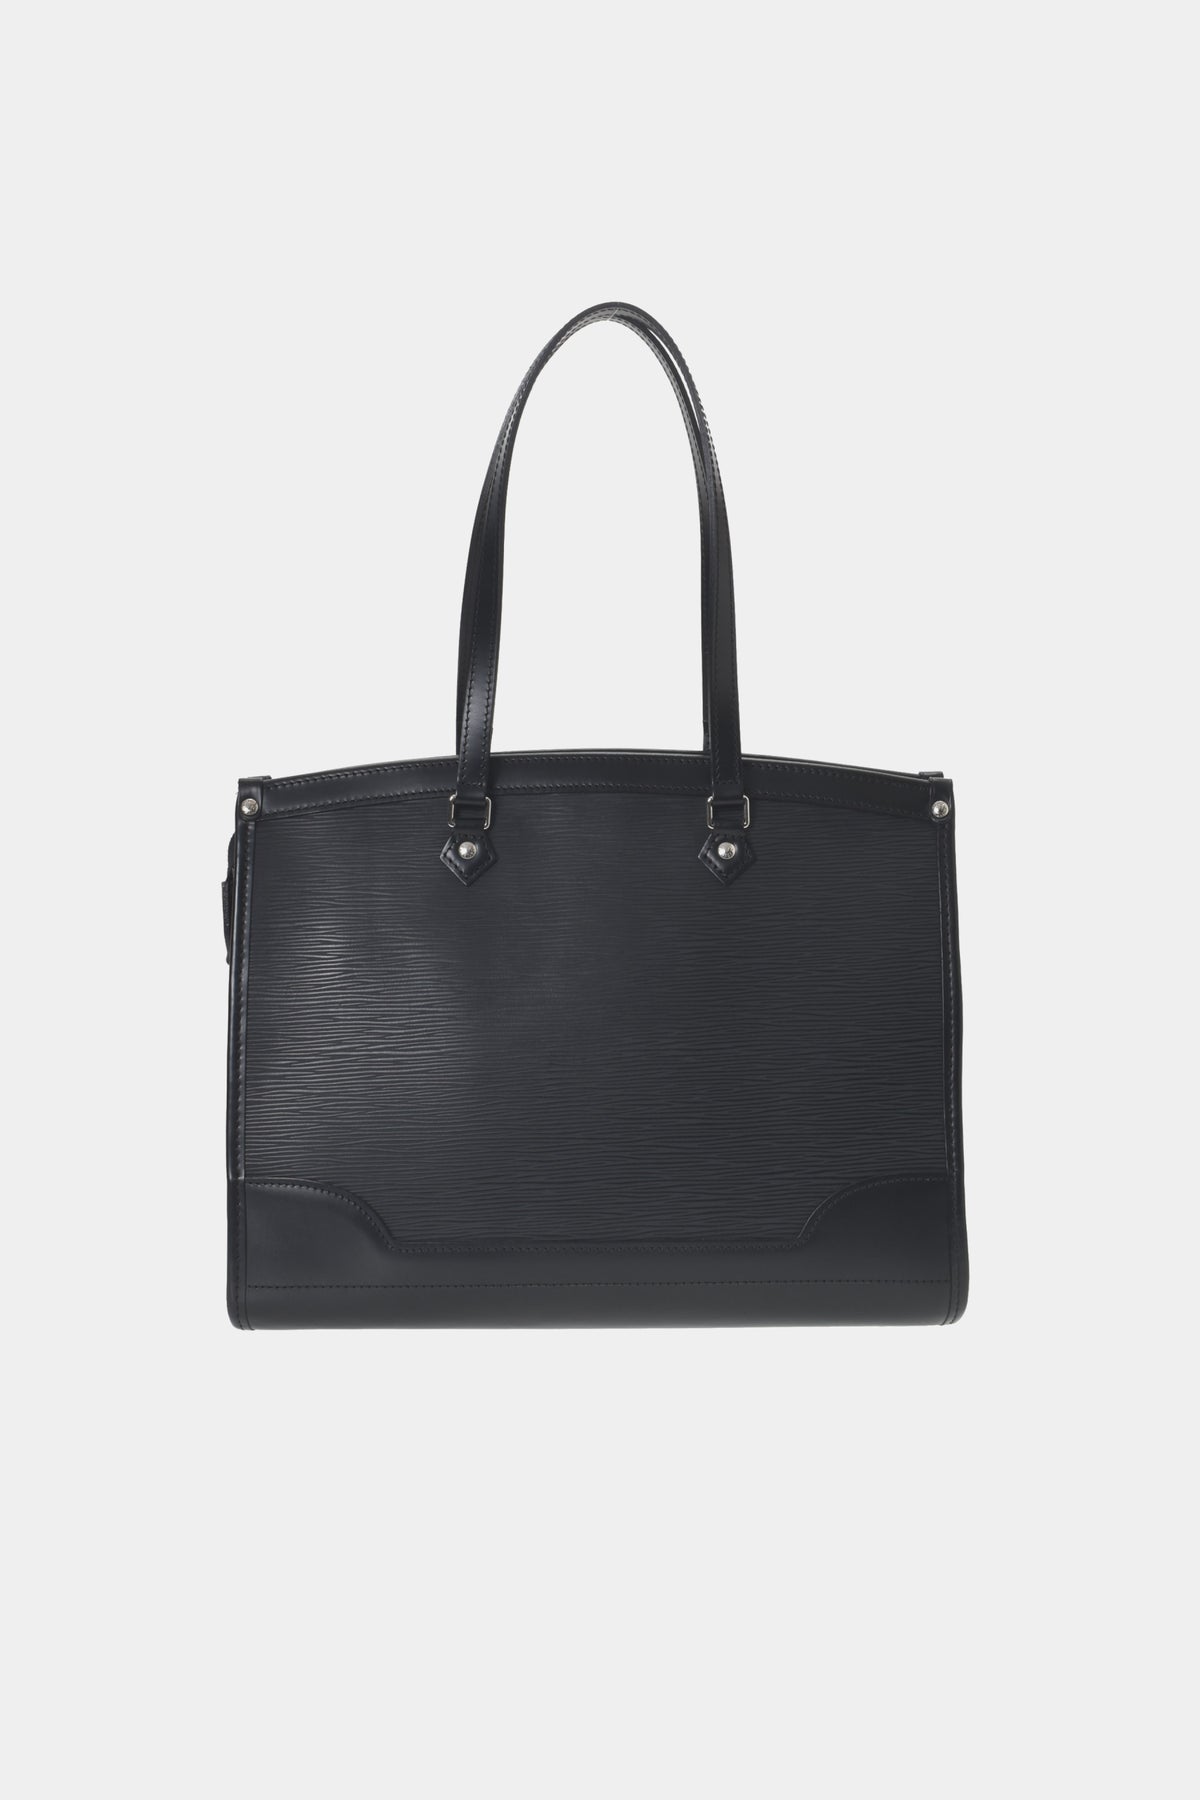 Louis Vuitton, Bags, Authentic Louis Vuitton Madeleine Pm Epi Leather  Shoulder Bag Off White